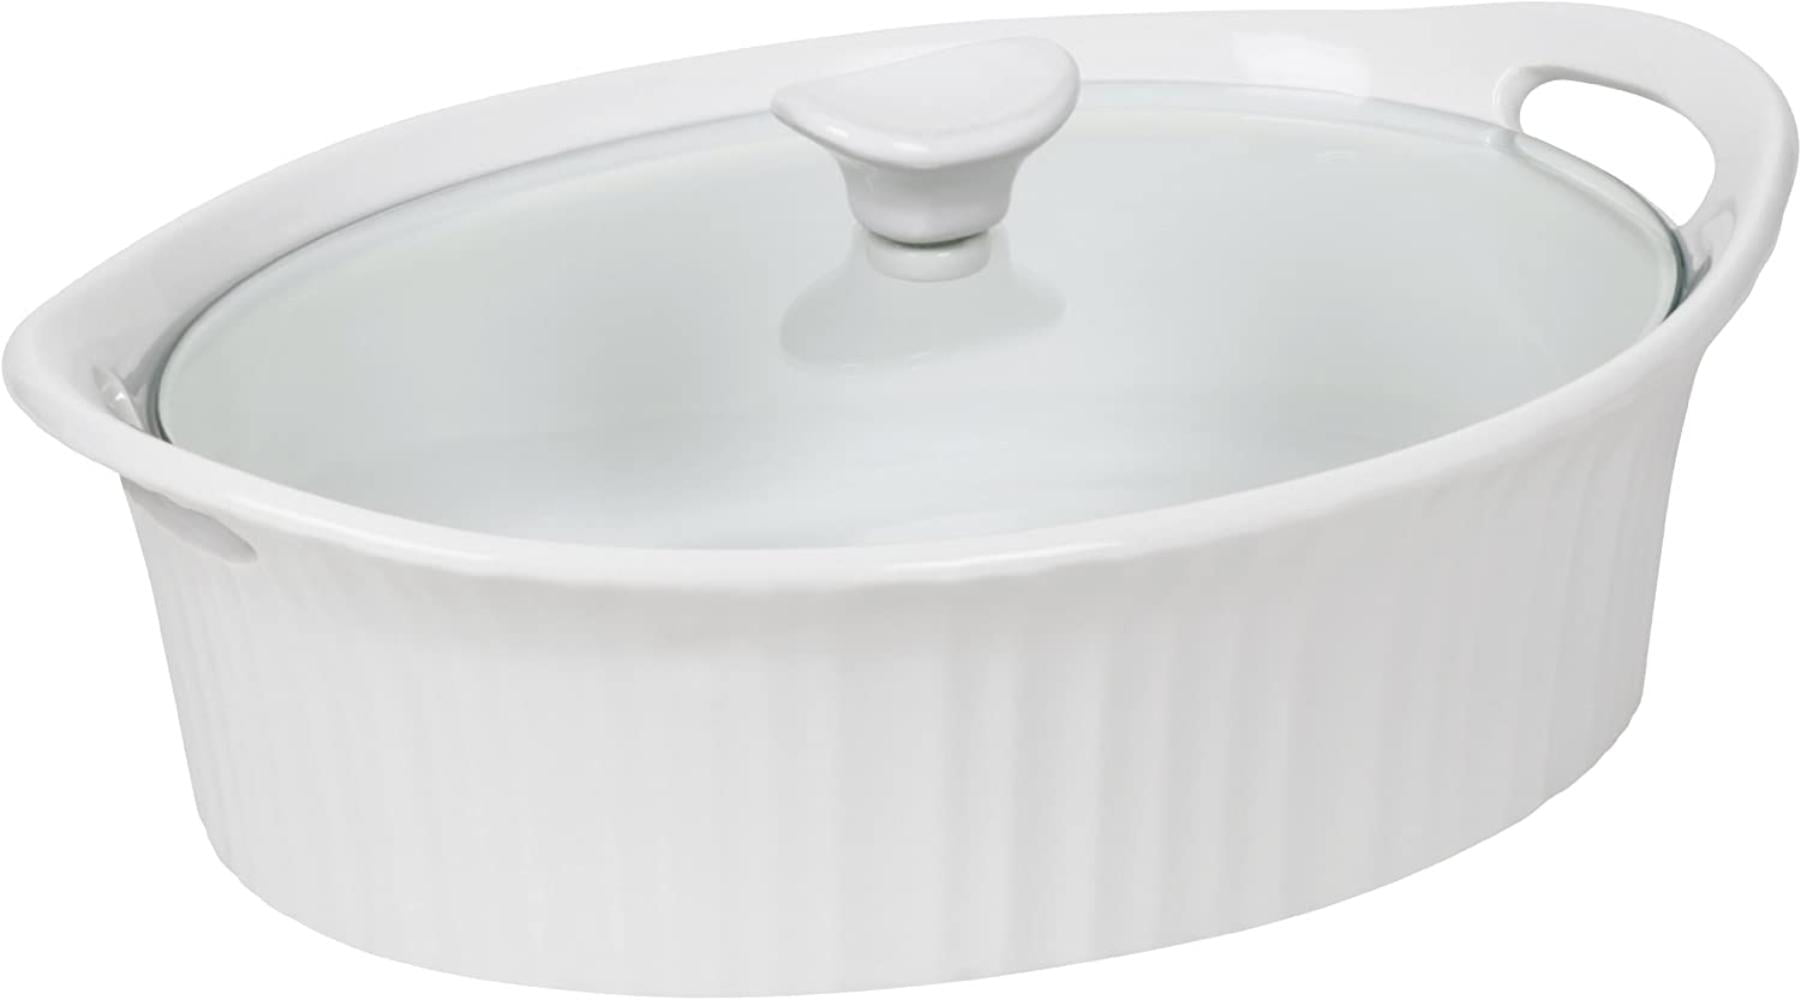 3.25 Liter White 3.5 Quart Round CorningWare Pyroceram Classic Casserole Dish with Glass Cover Large